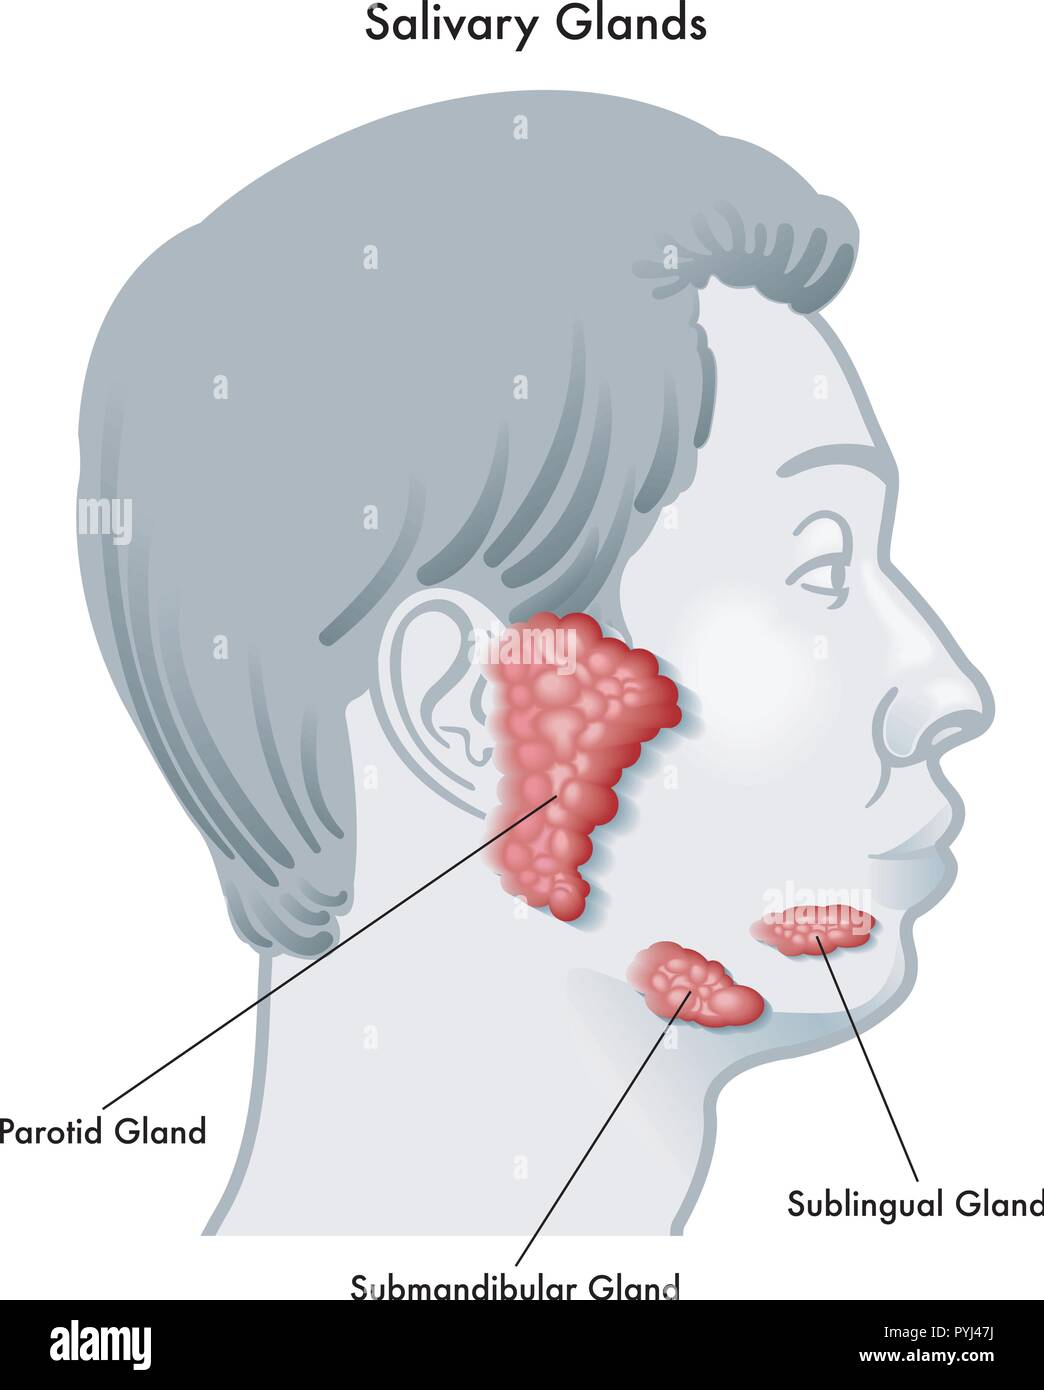 Anatomy Of Human Salivary Glands Stock Photo Alamy - vrogue.co